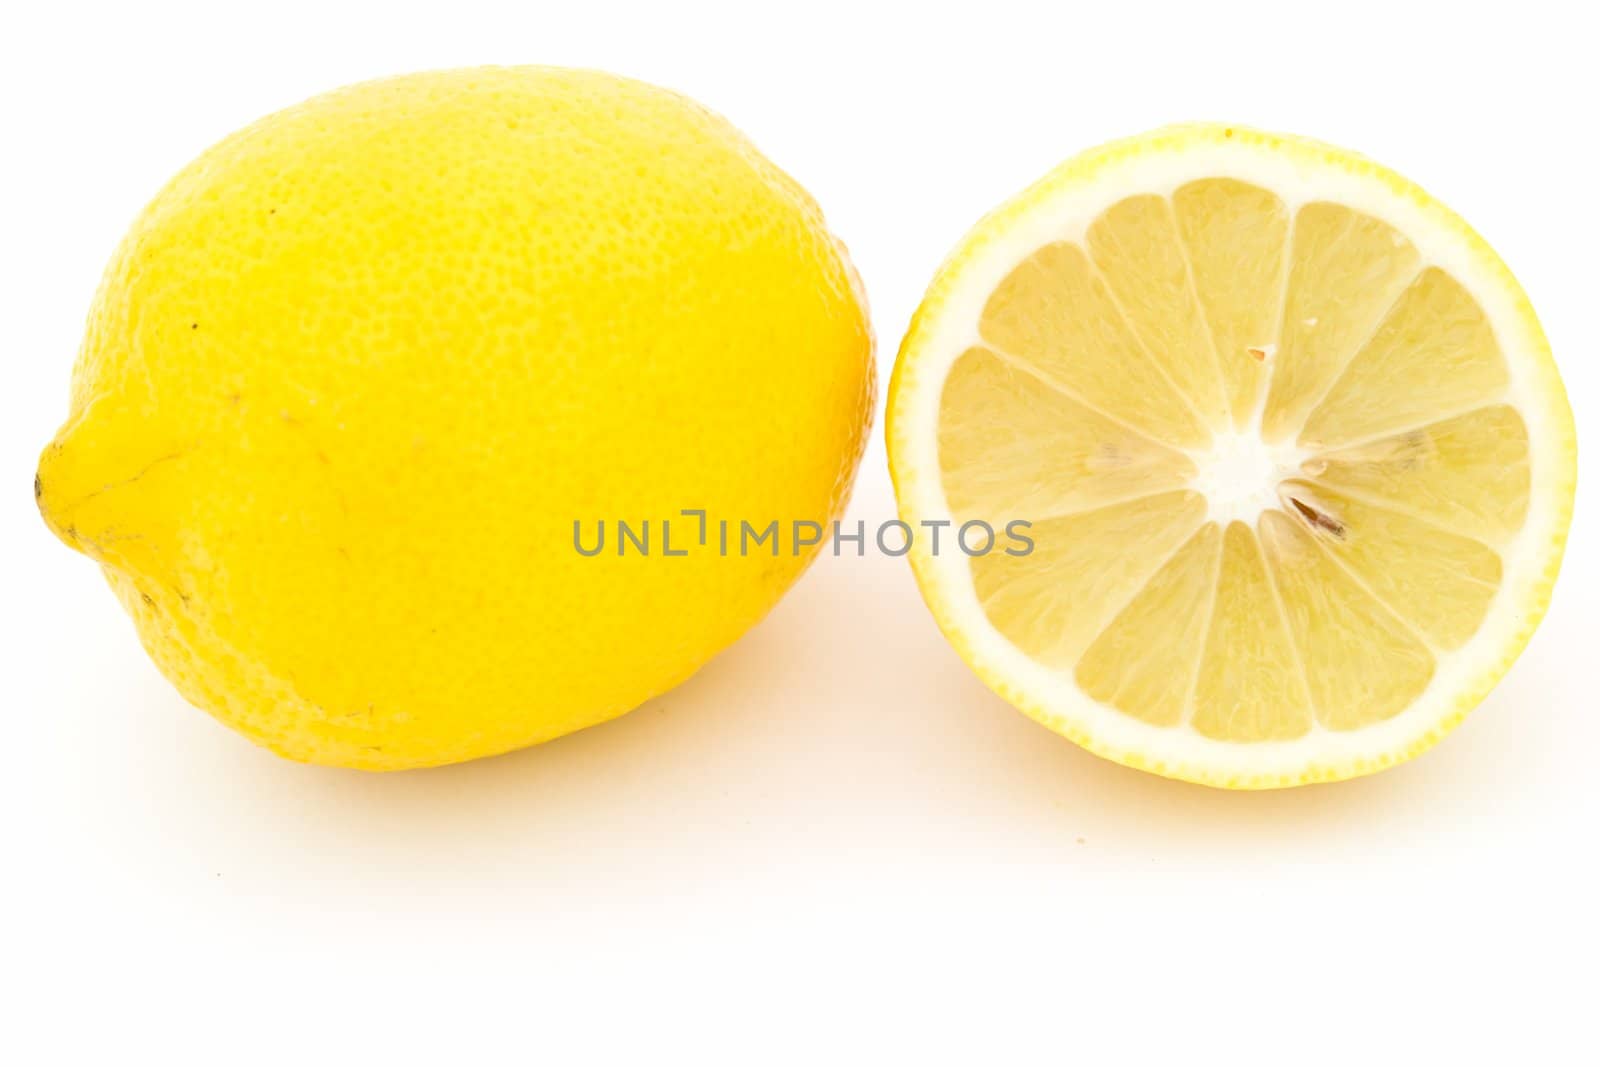 juicy yellow lemon on a white background